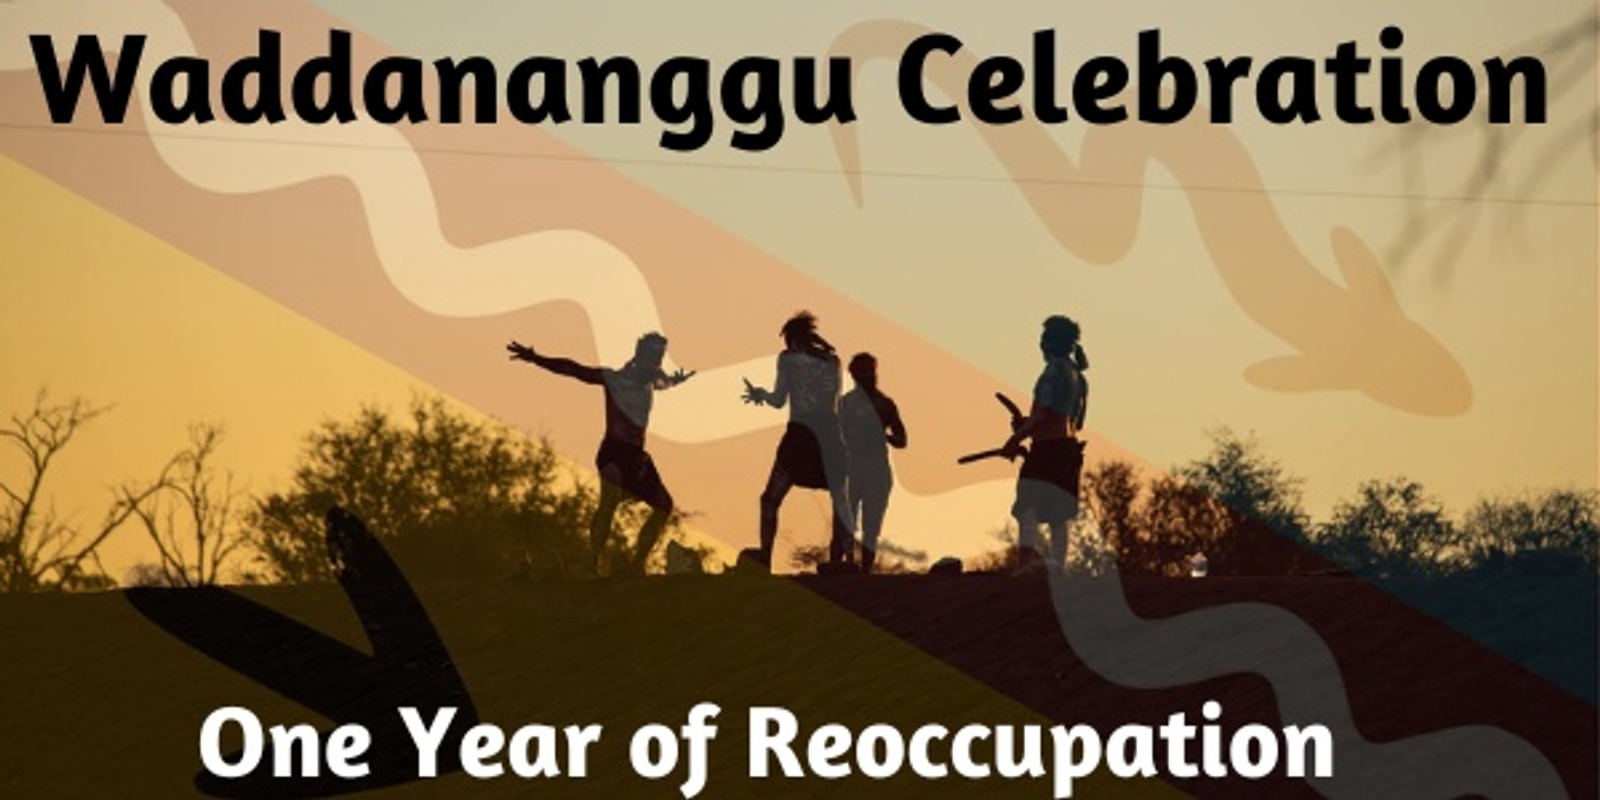 Banner image for Waddananggu Celebration - One Year of Reoccupation